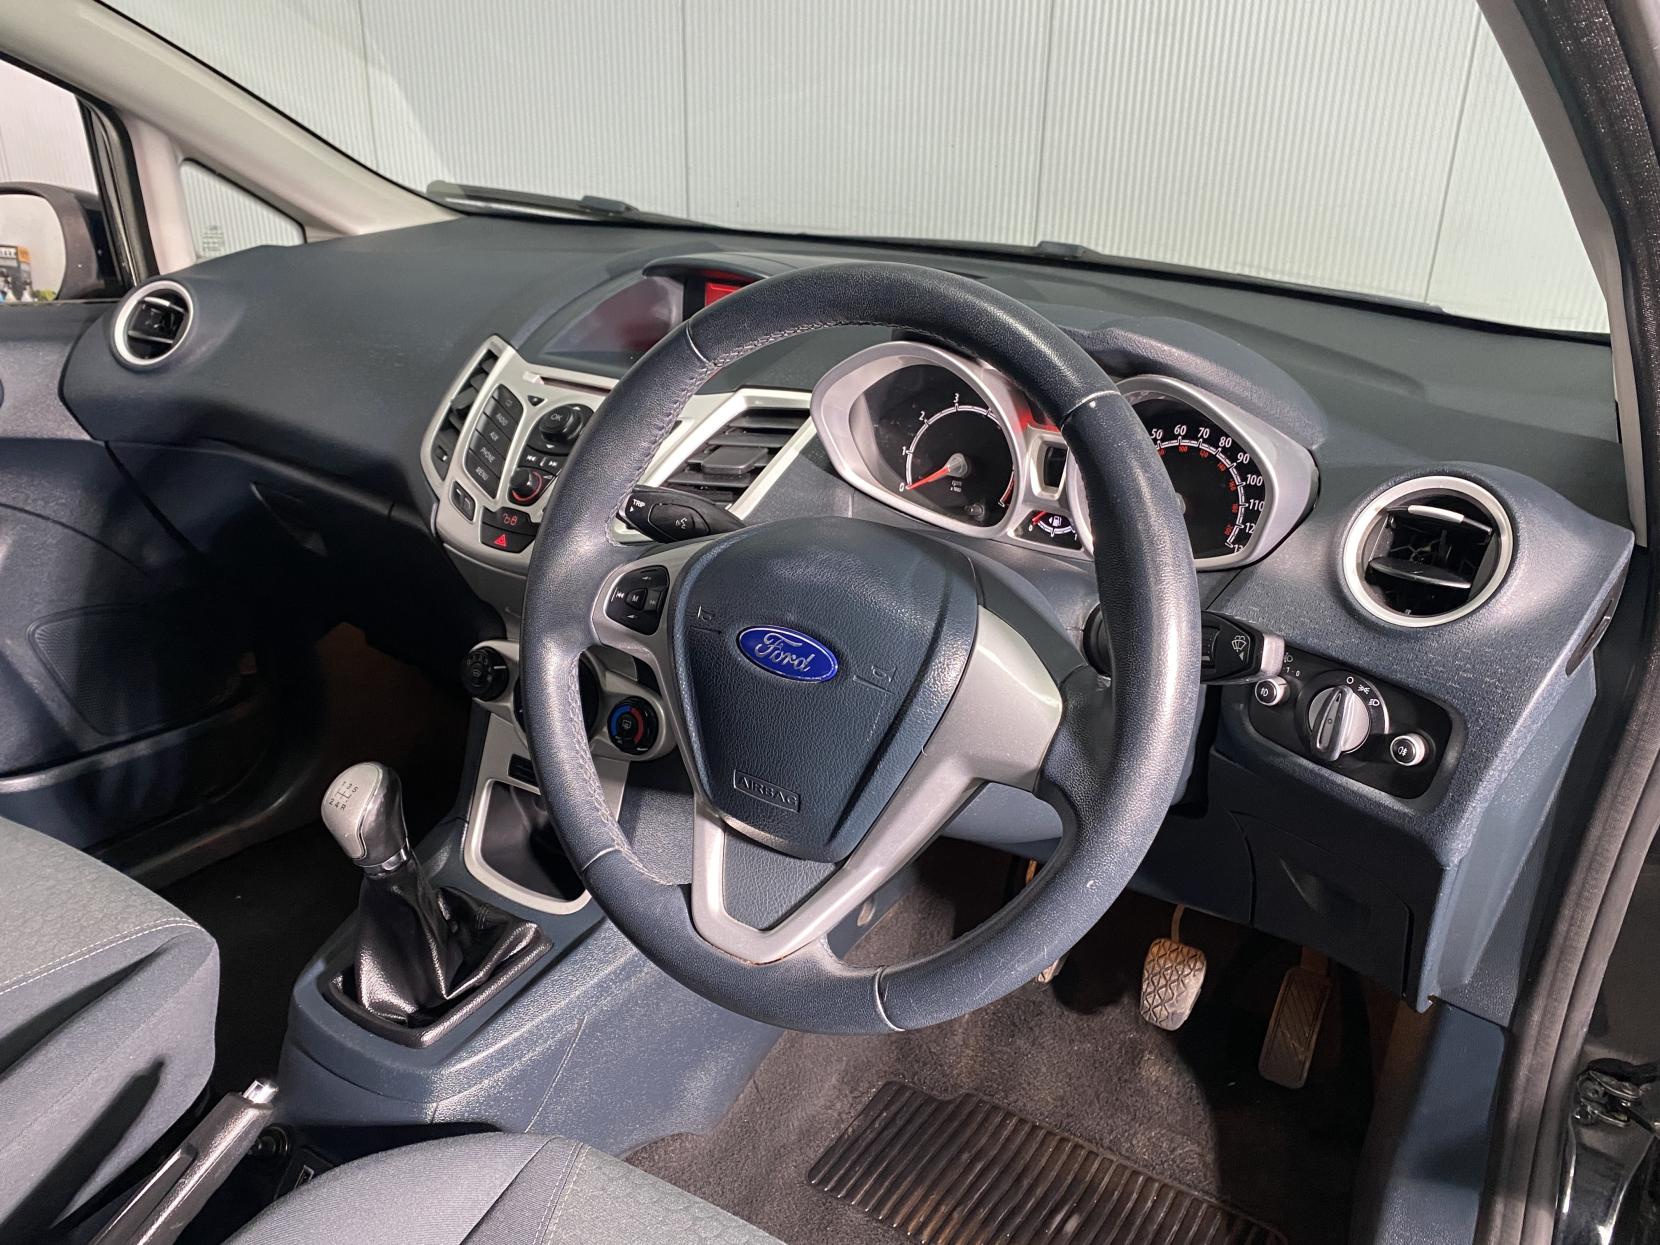 Ford Fiesta 1.4 Zetec Hatchback 5dr Petrol Manual (130 g/km, 94 bhp)